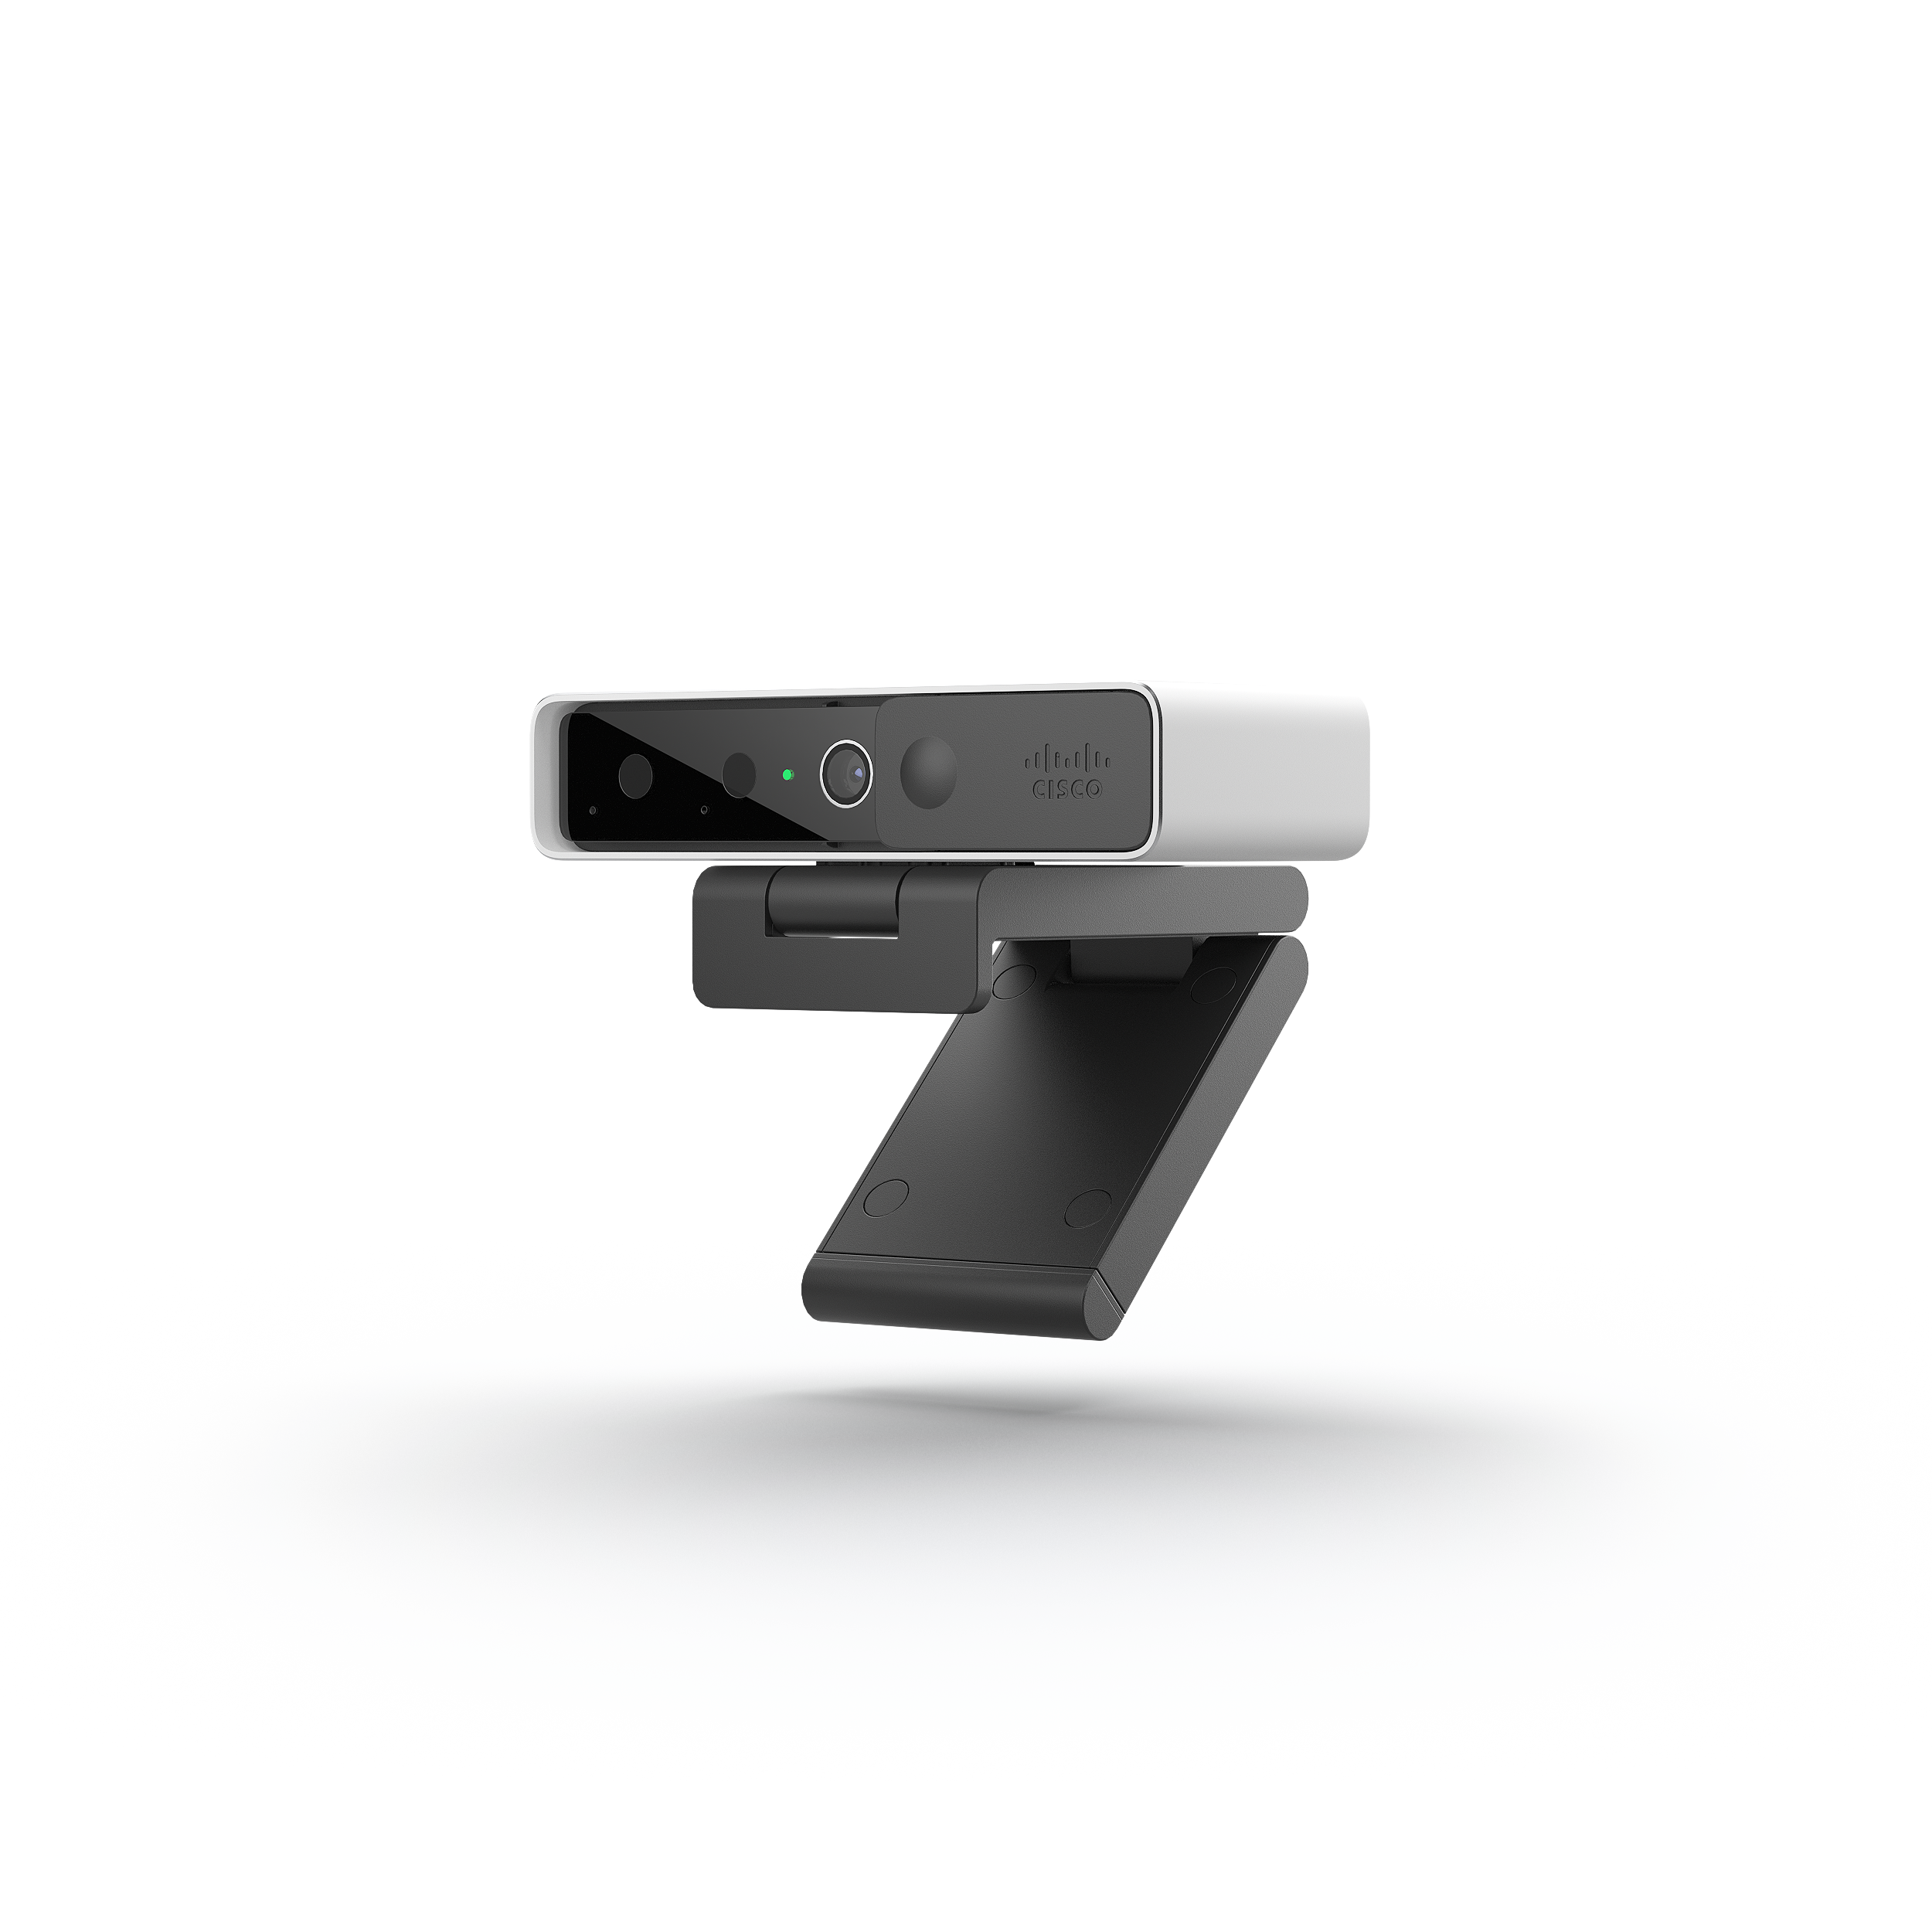 Webex Desk Camera, Carbon Black, a 4K Ultra HD webcam device